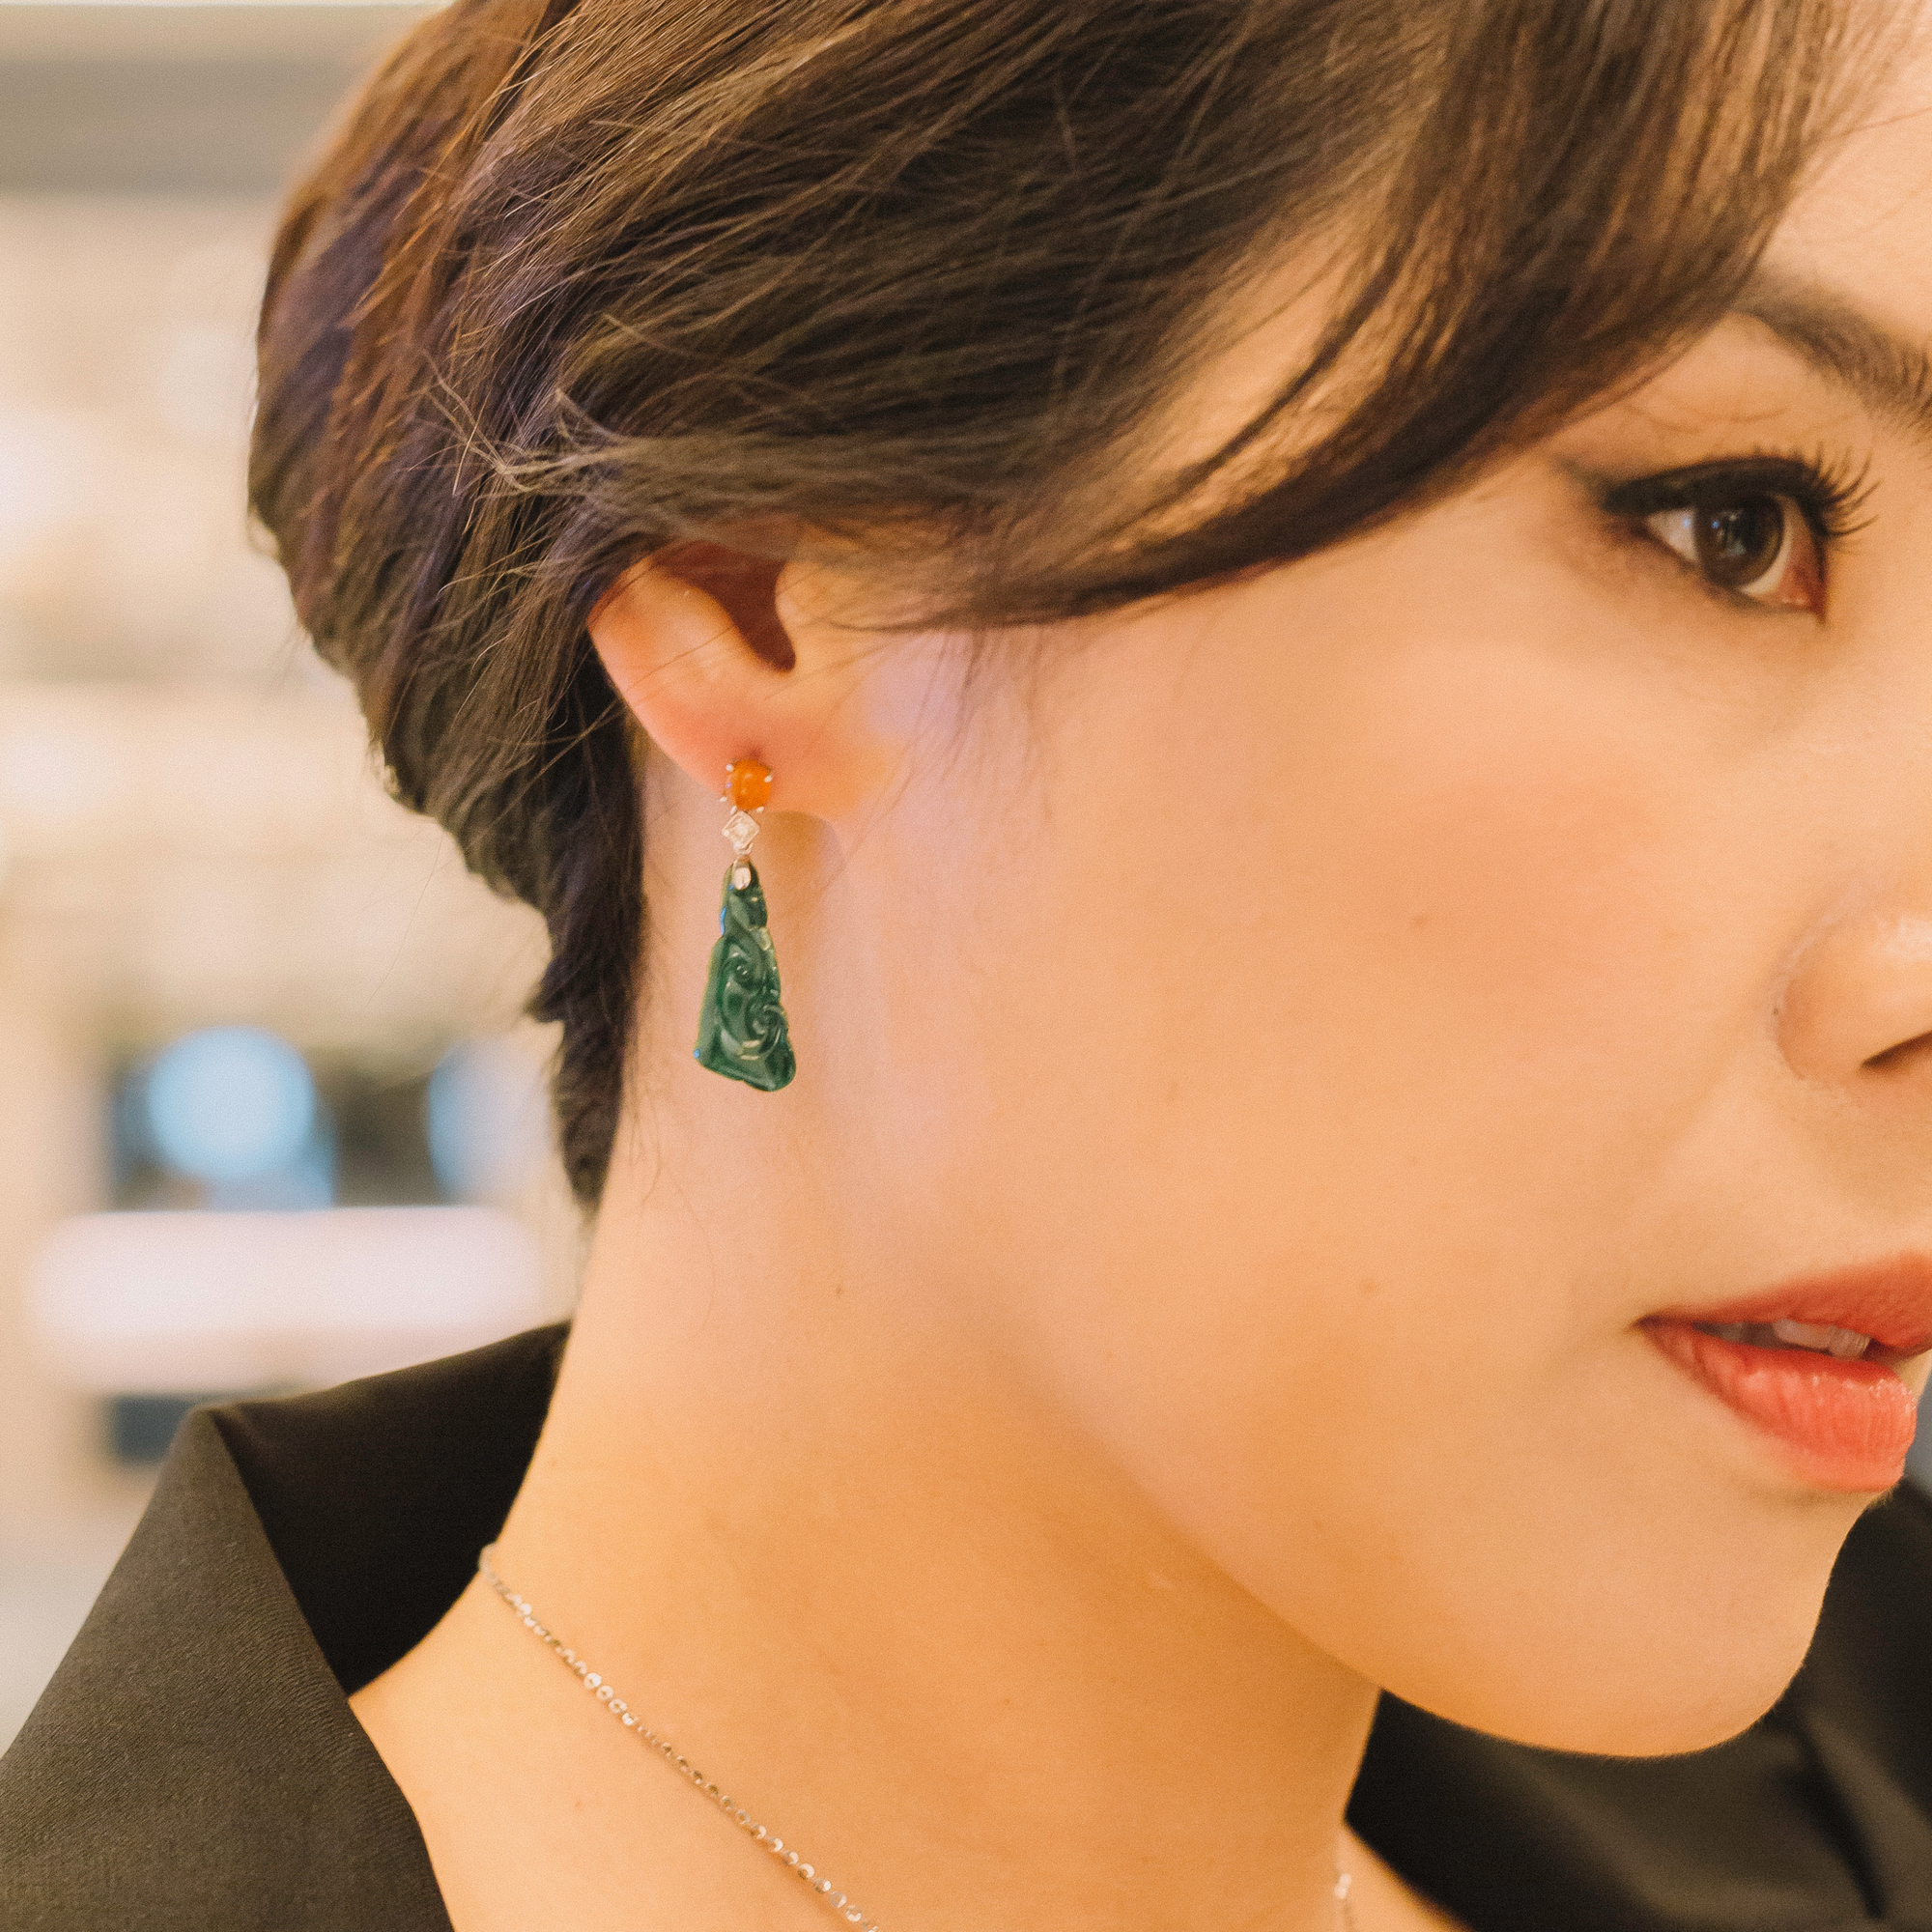 Stunning gorgeous deep-green jadeite earrings